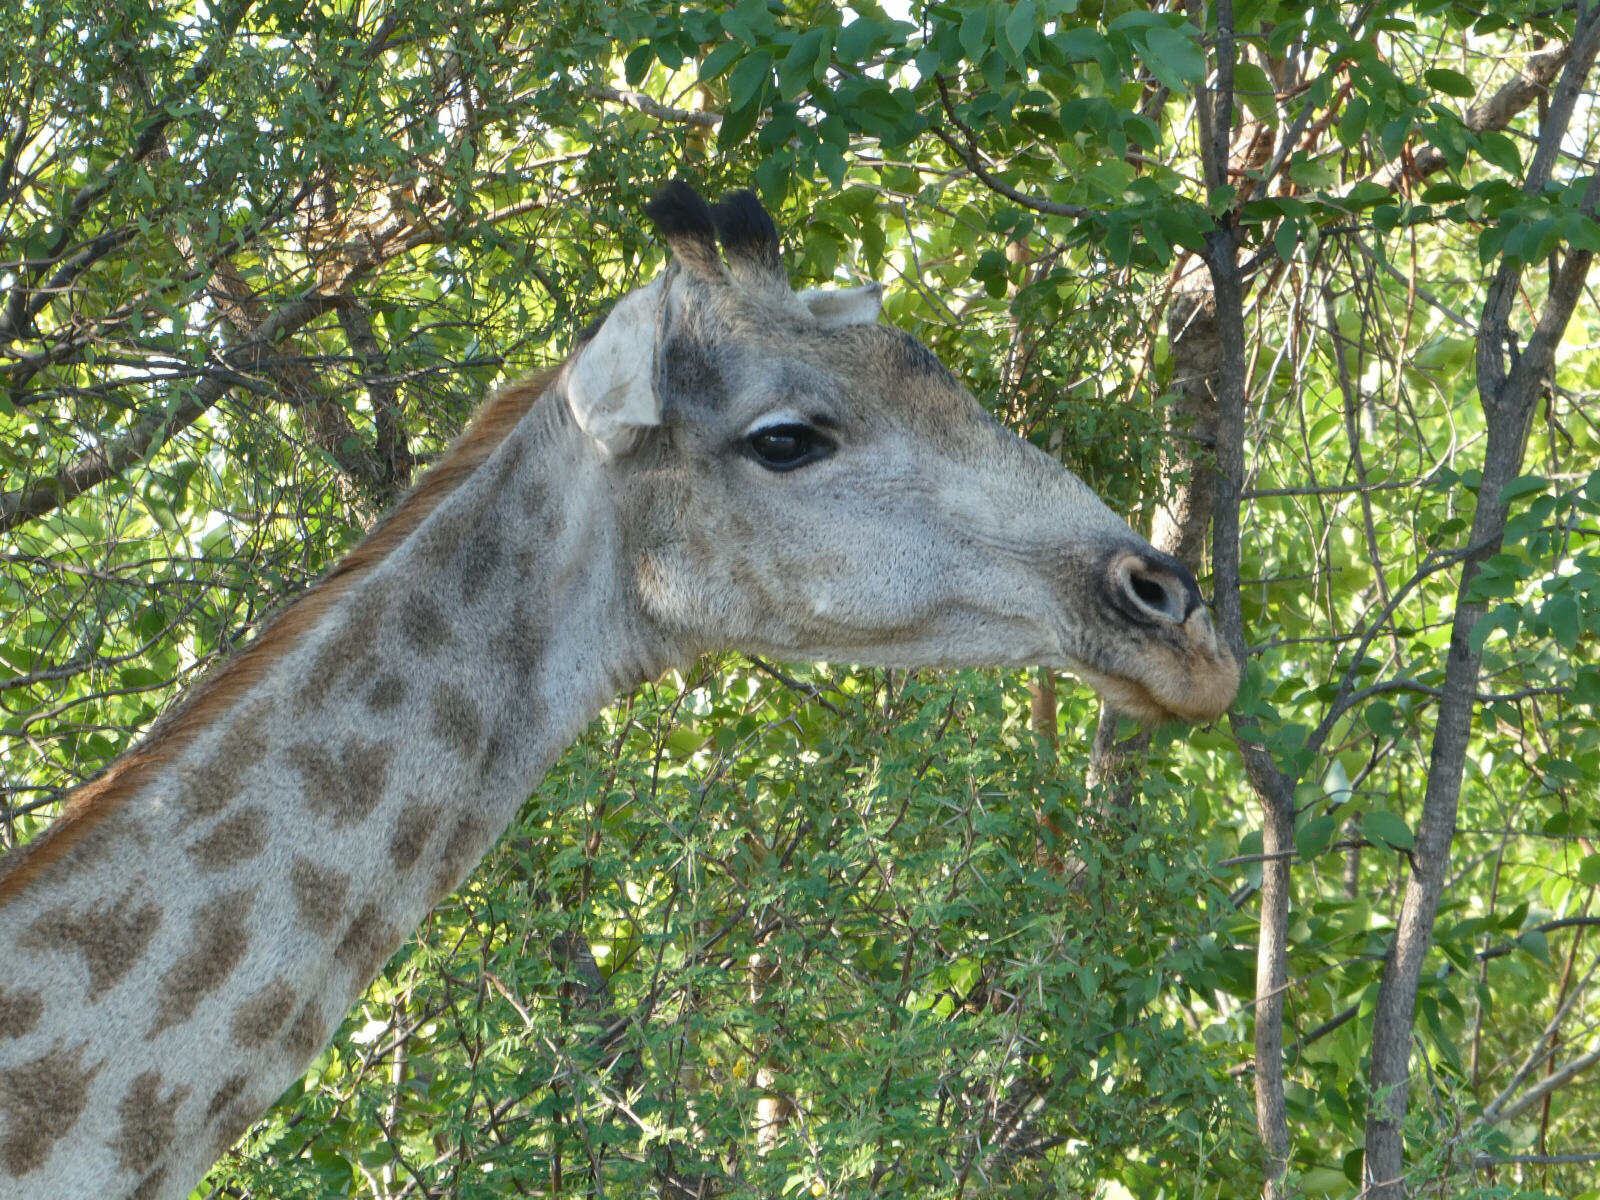 A giraffe by the road near Livingstone, Zambia